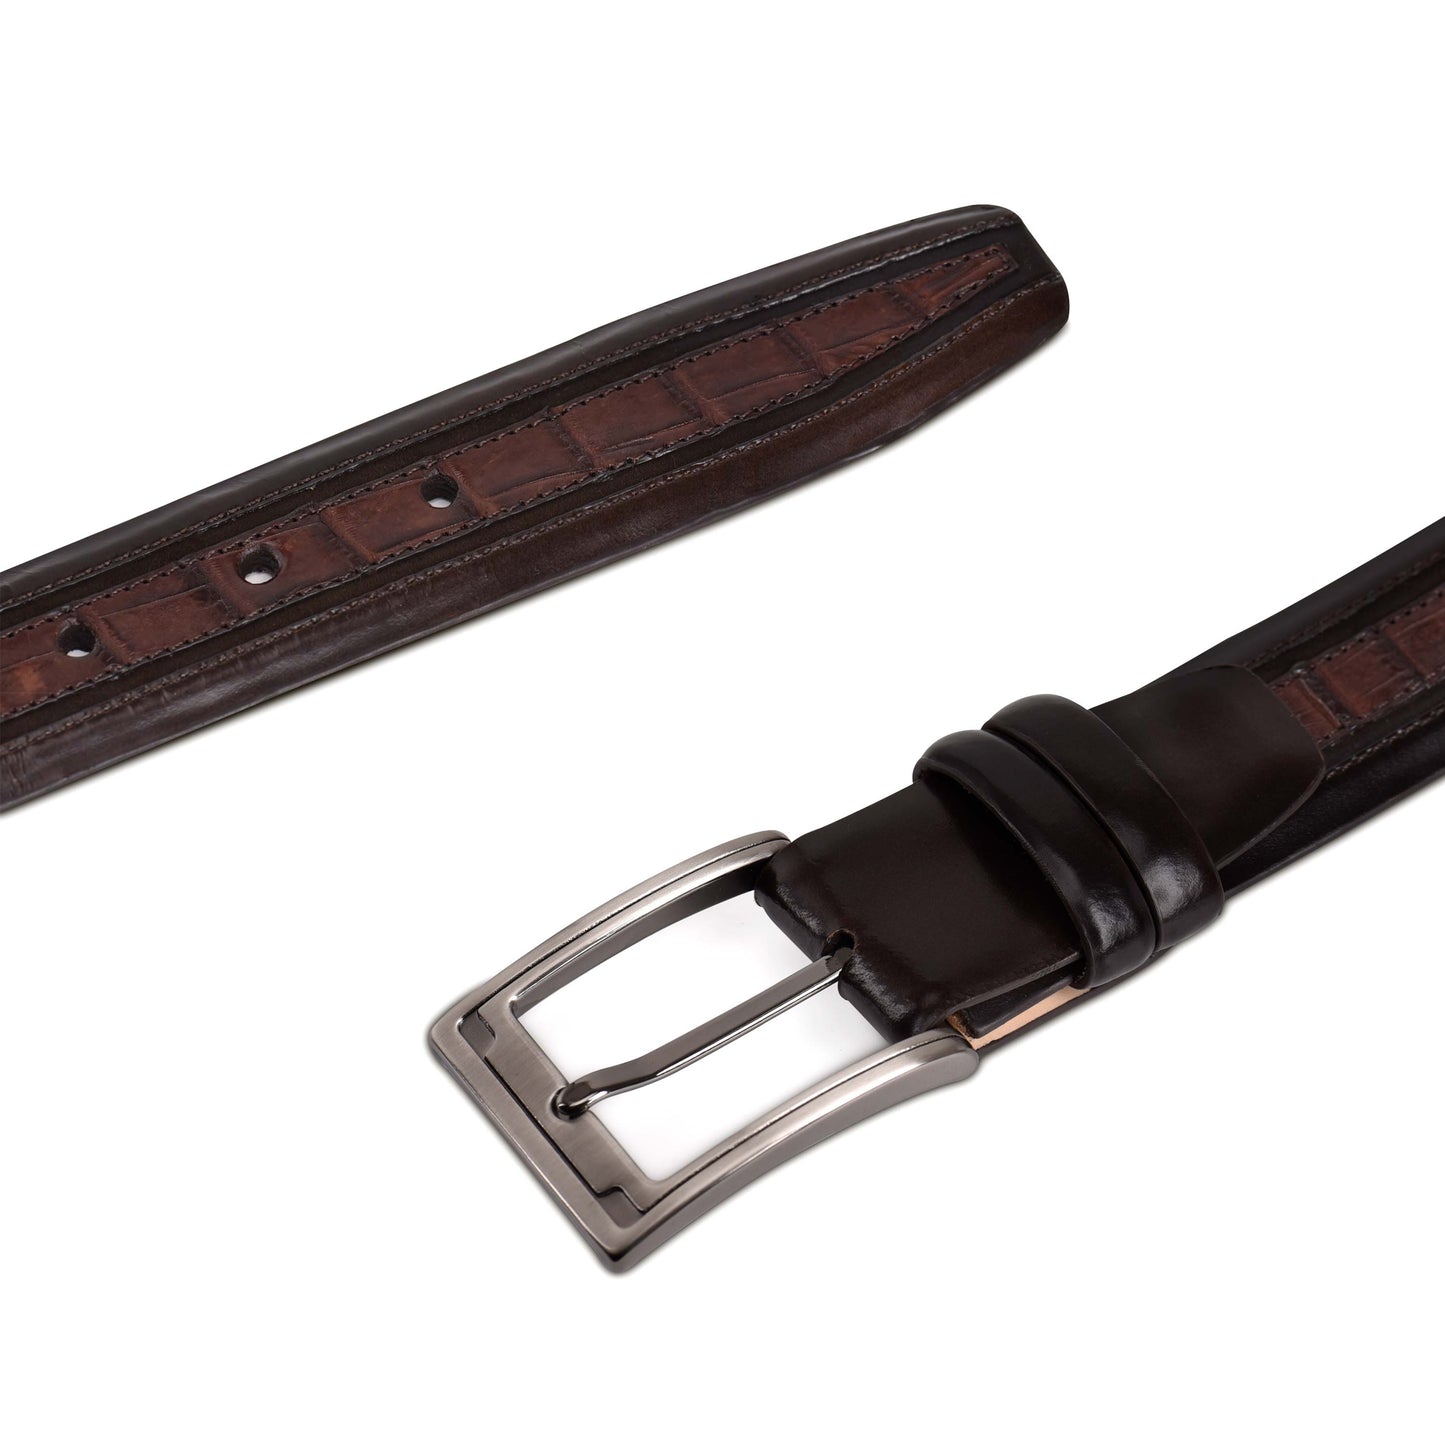 Formal dark brown exotic leather belt